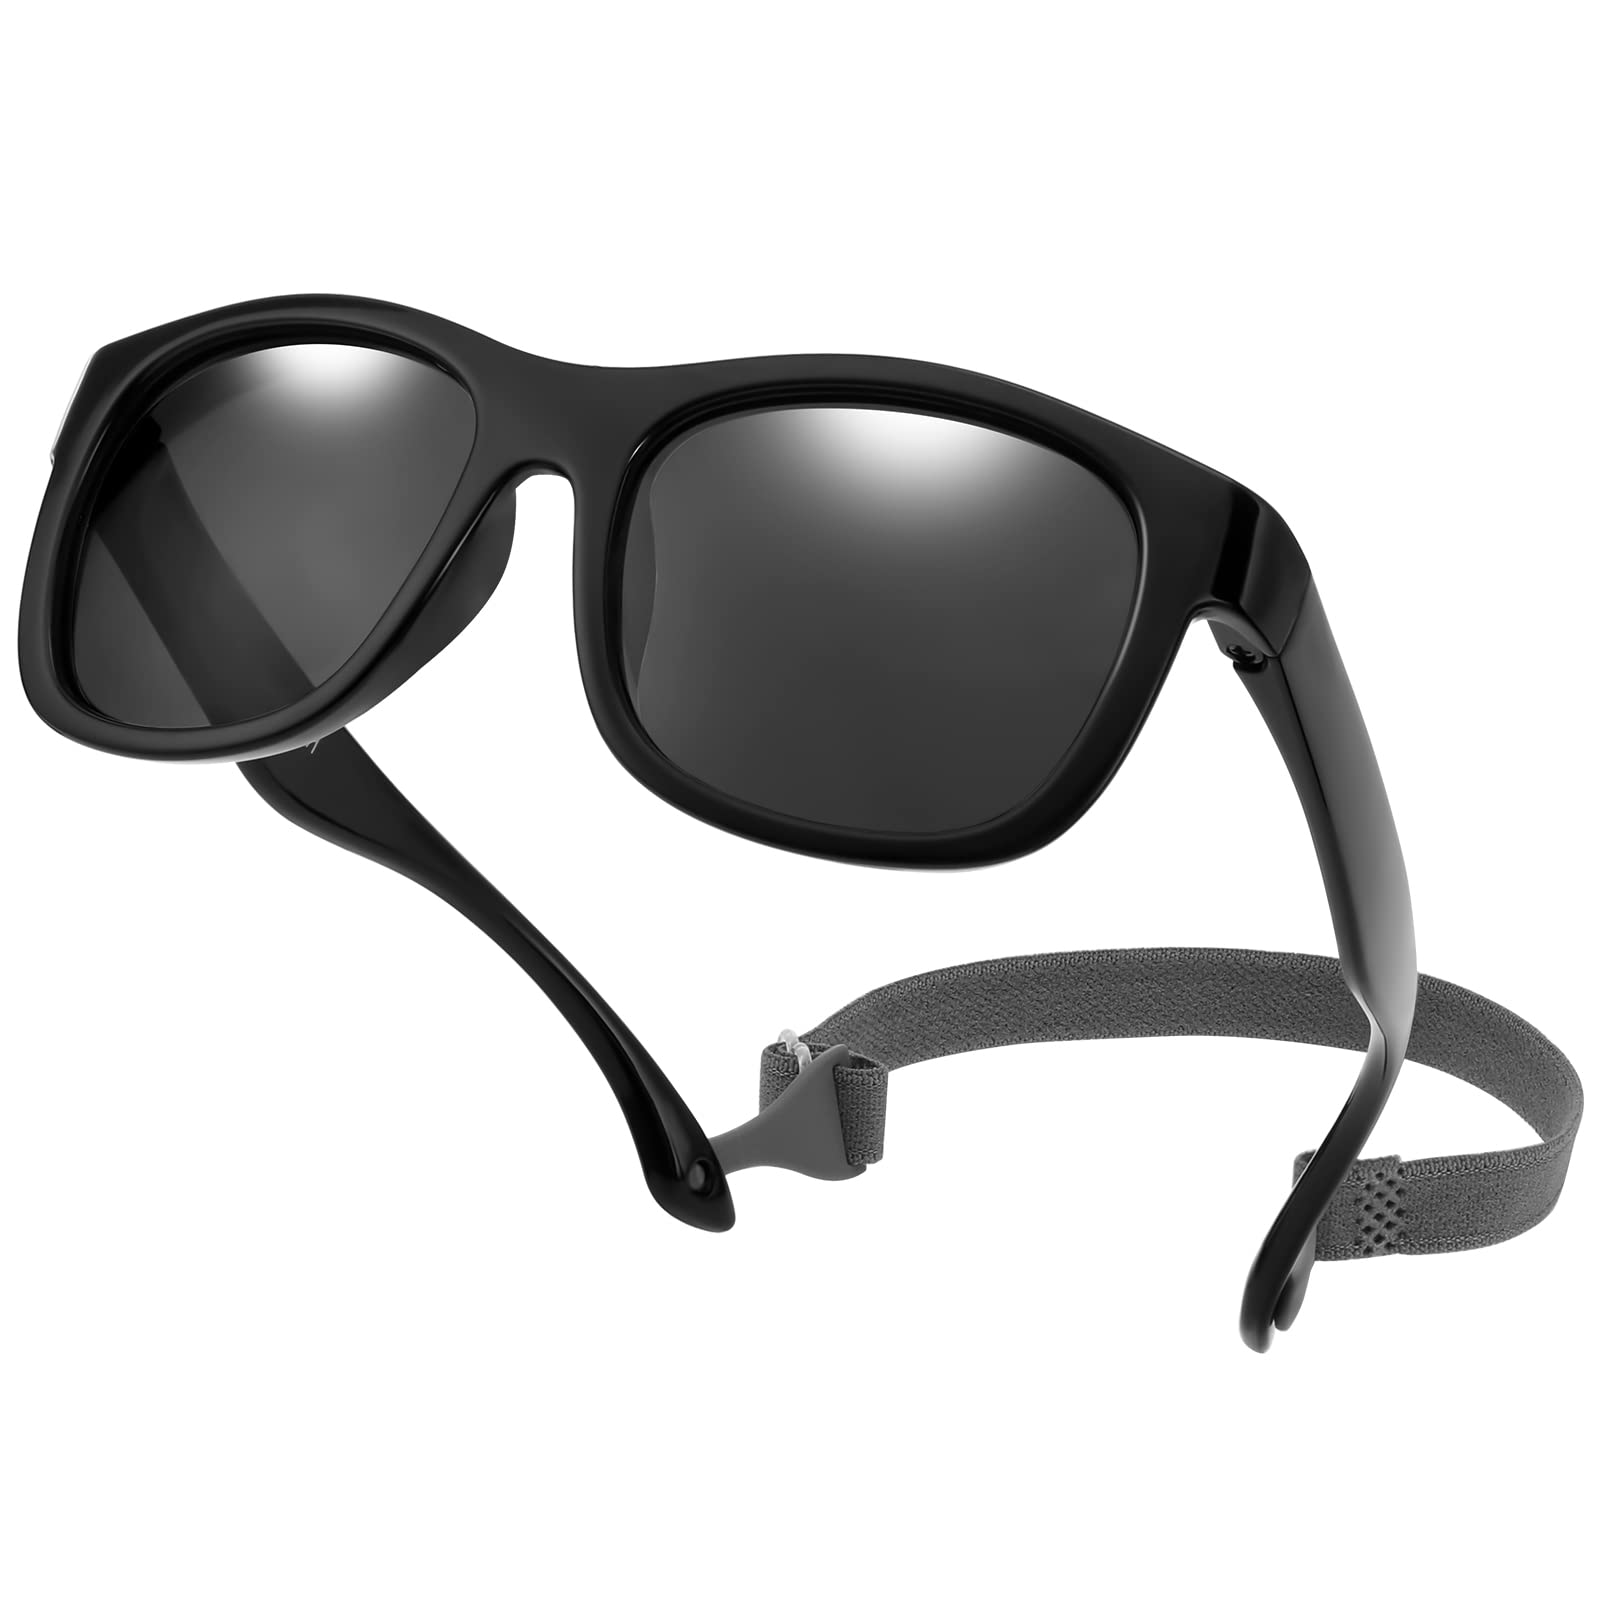 FANTESI Baby Sunglasses with Strap UV400 Protection Polarized